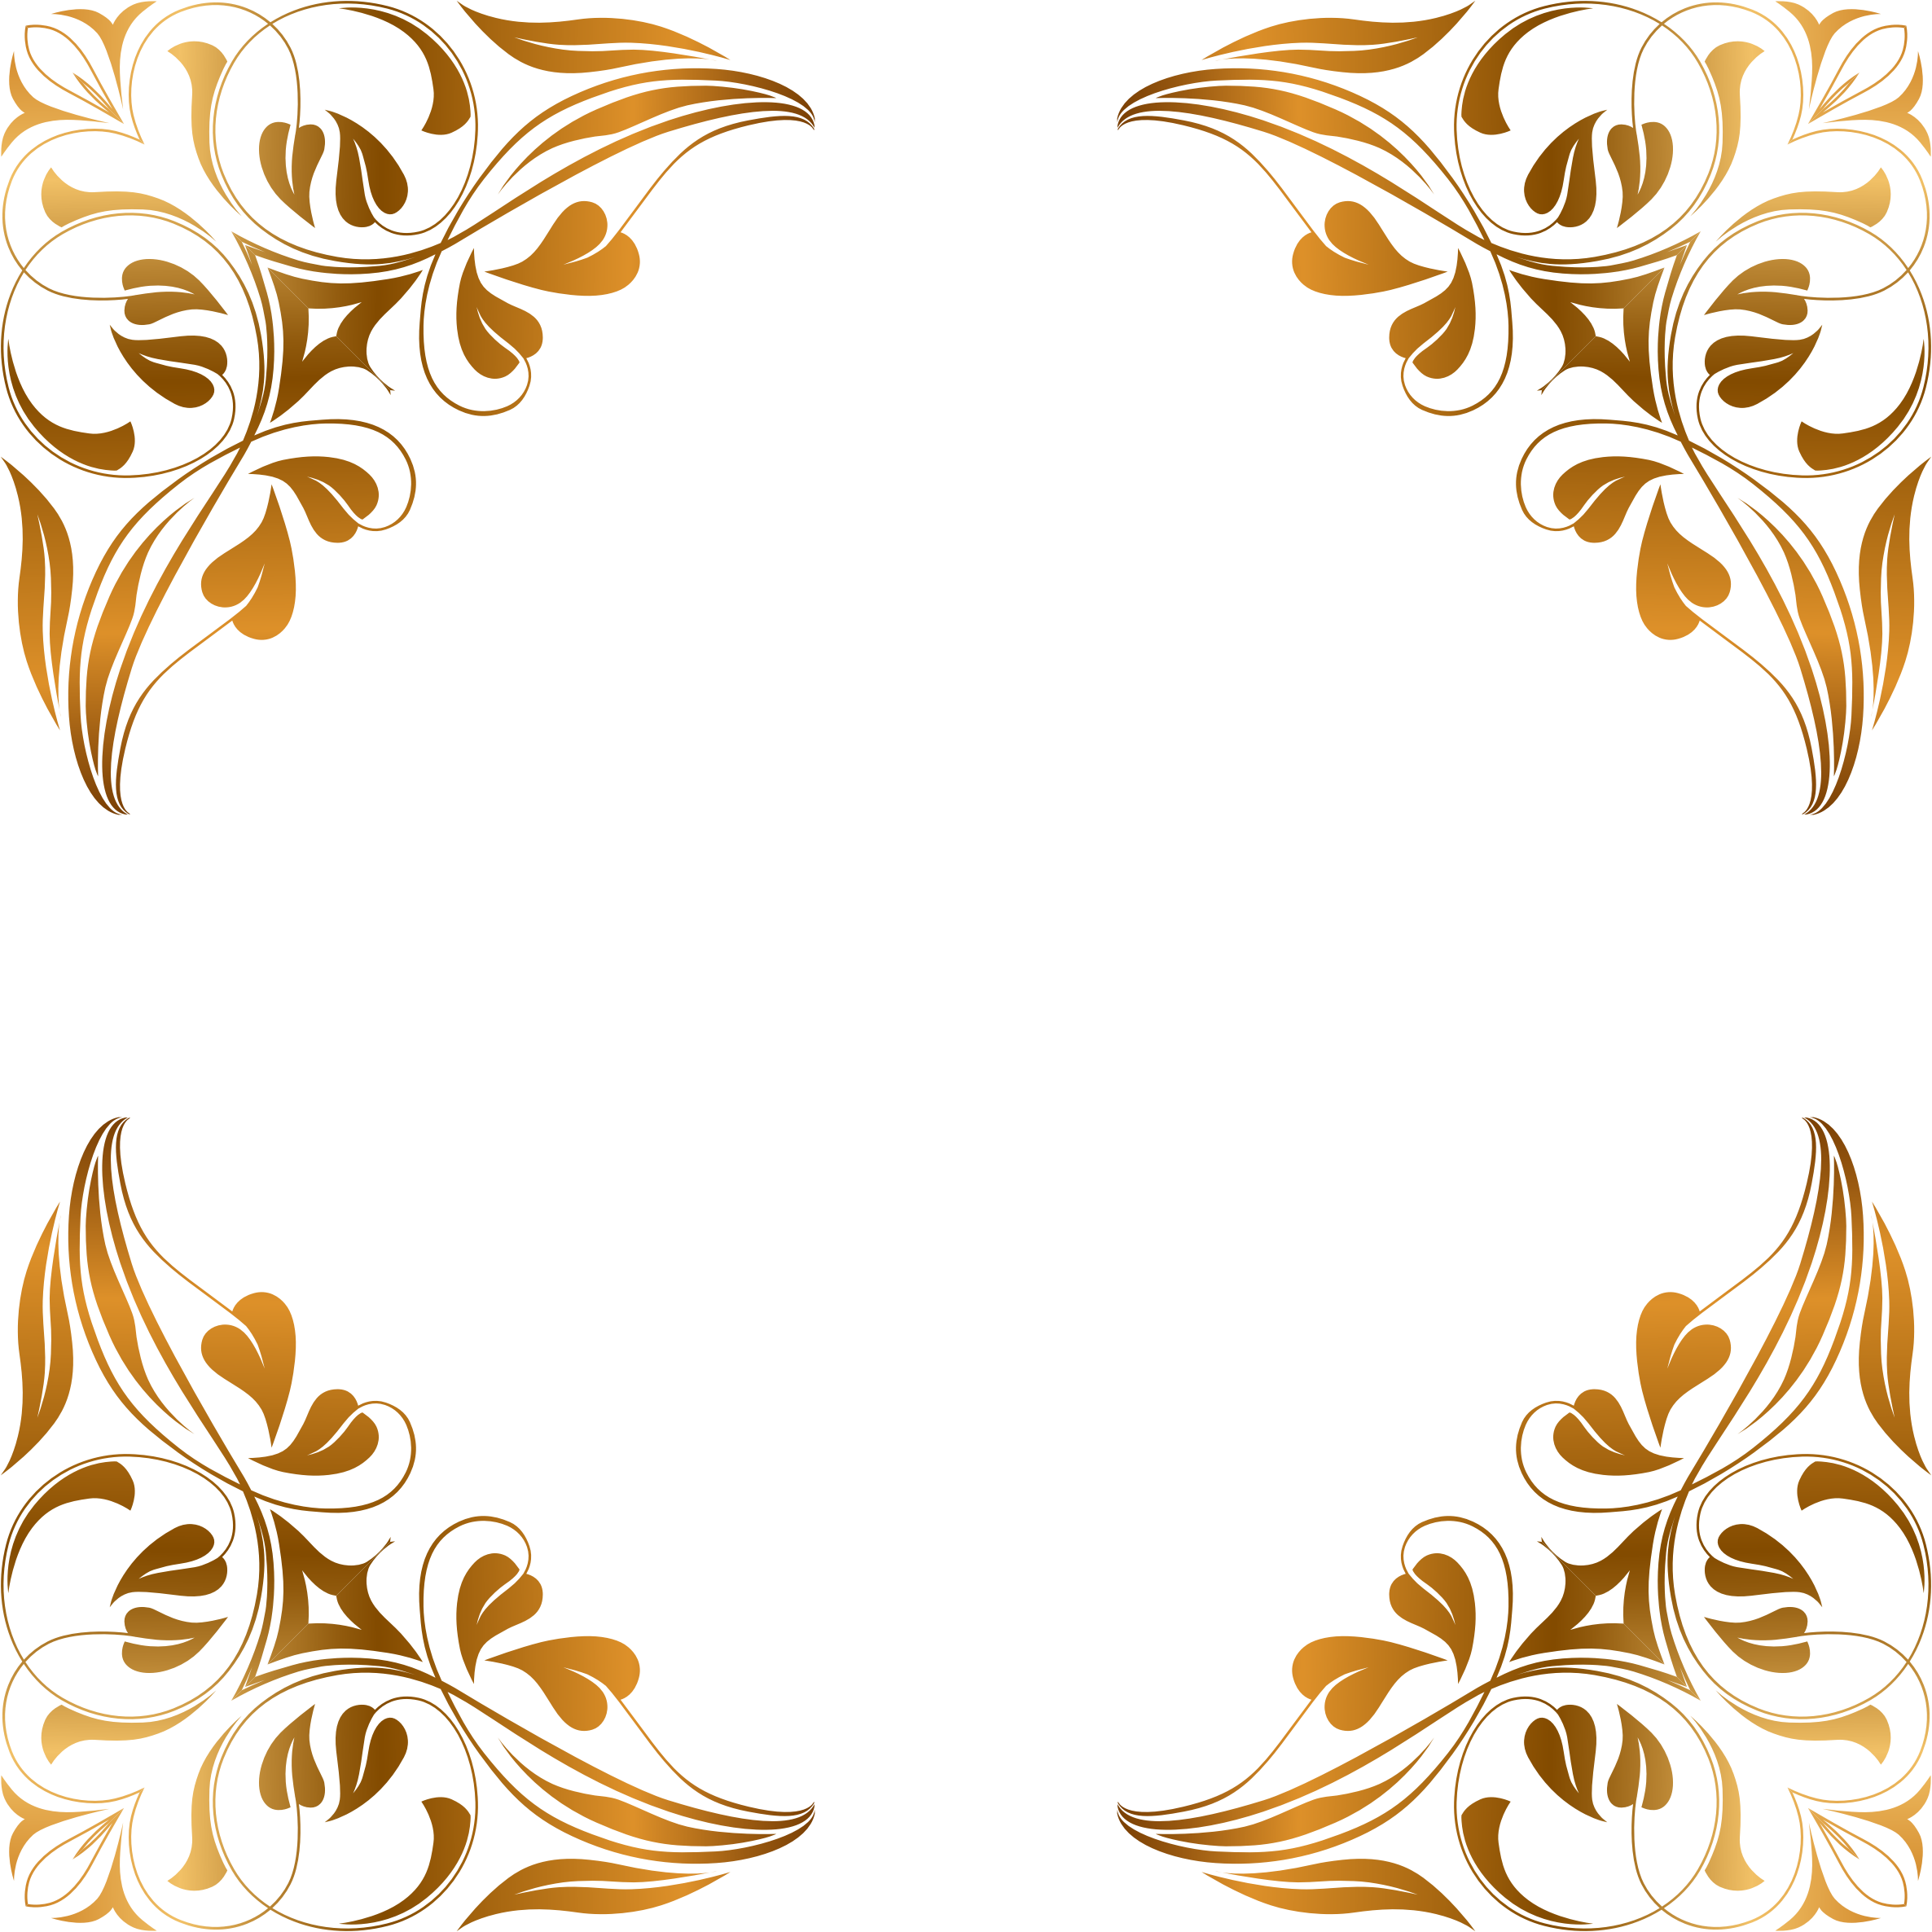 28 Collection Of Frame Design Flower Clipart - Gold Floral Border Png (2372x2372)